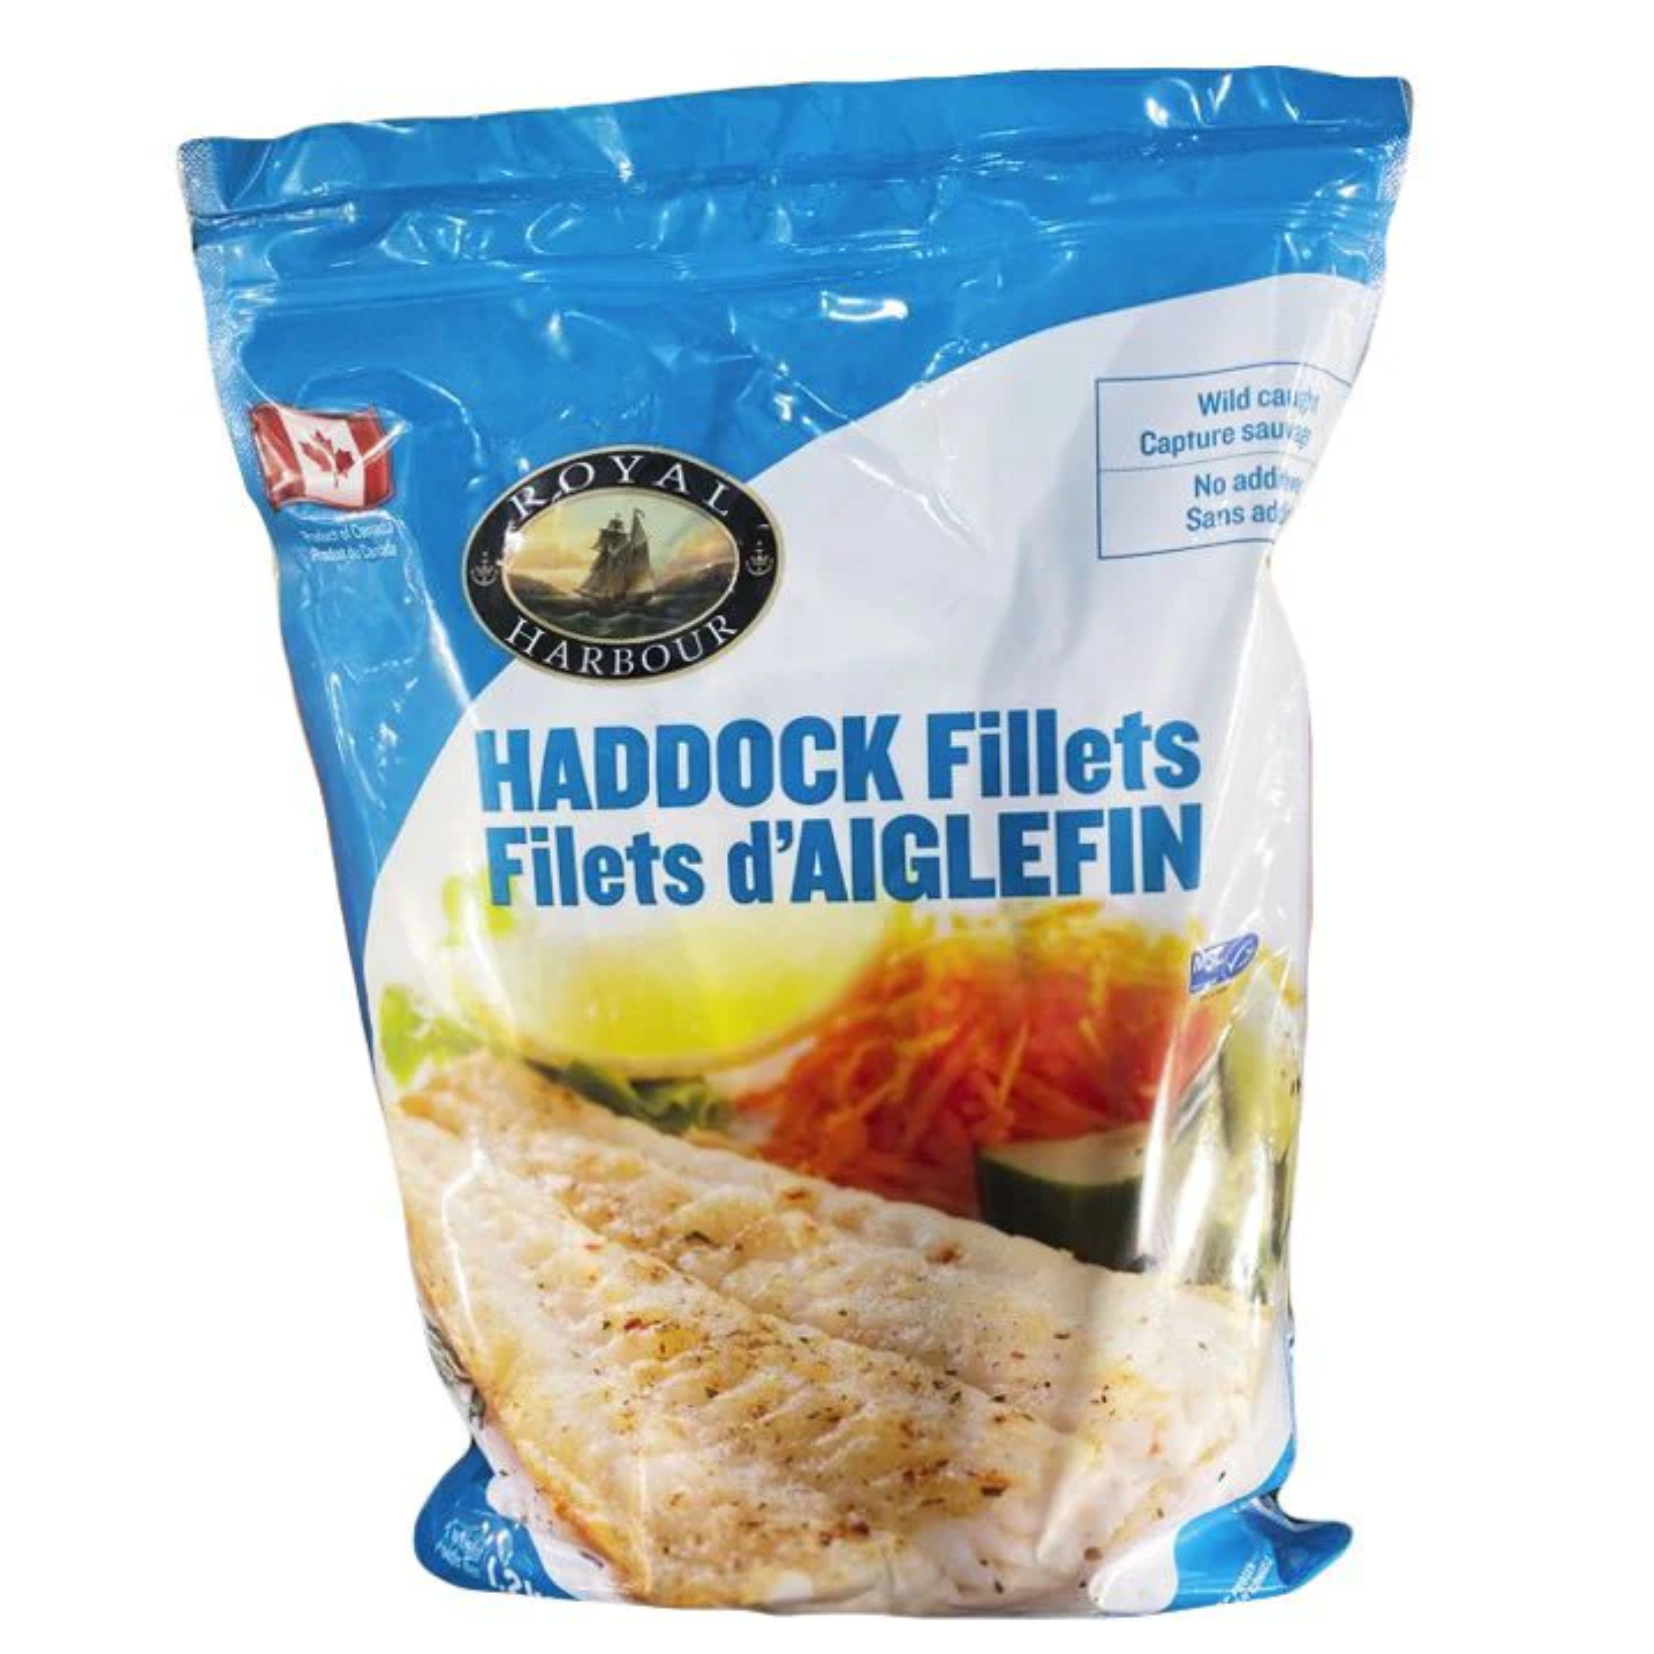 Royal Harbour Haddock Fillets 1ct